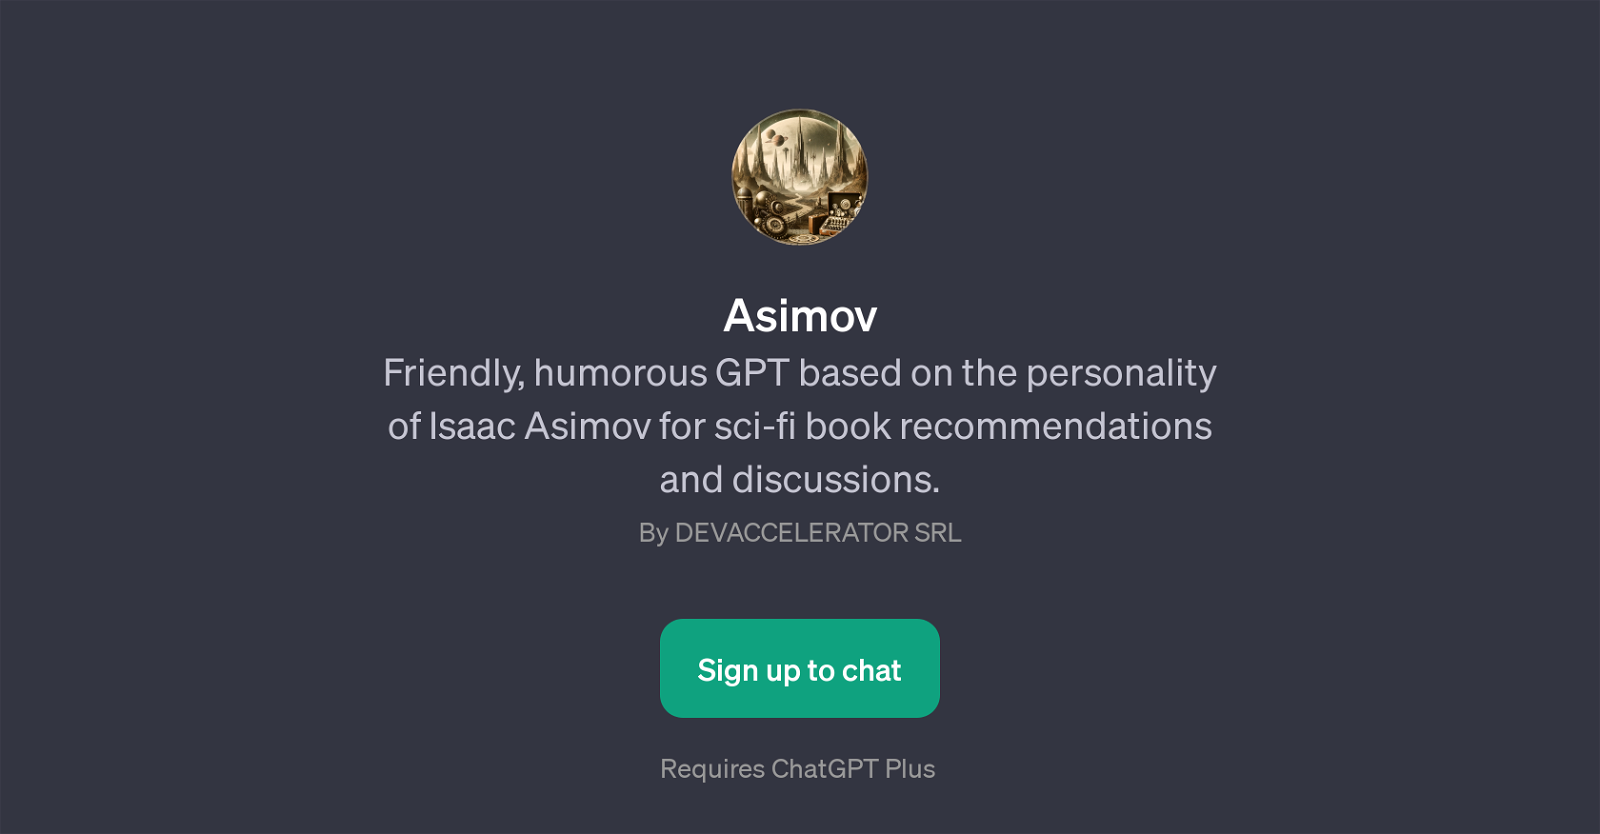 Asimov website